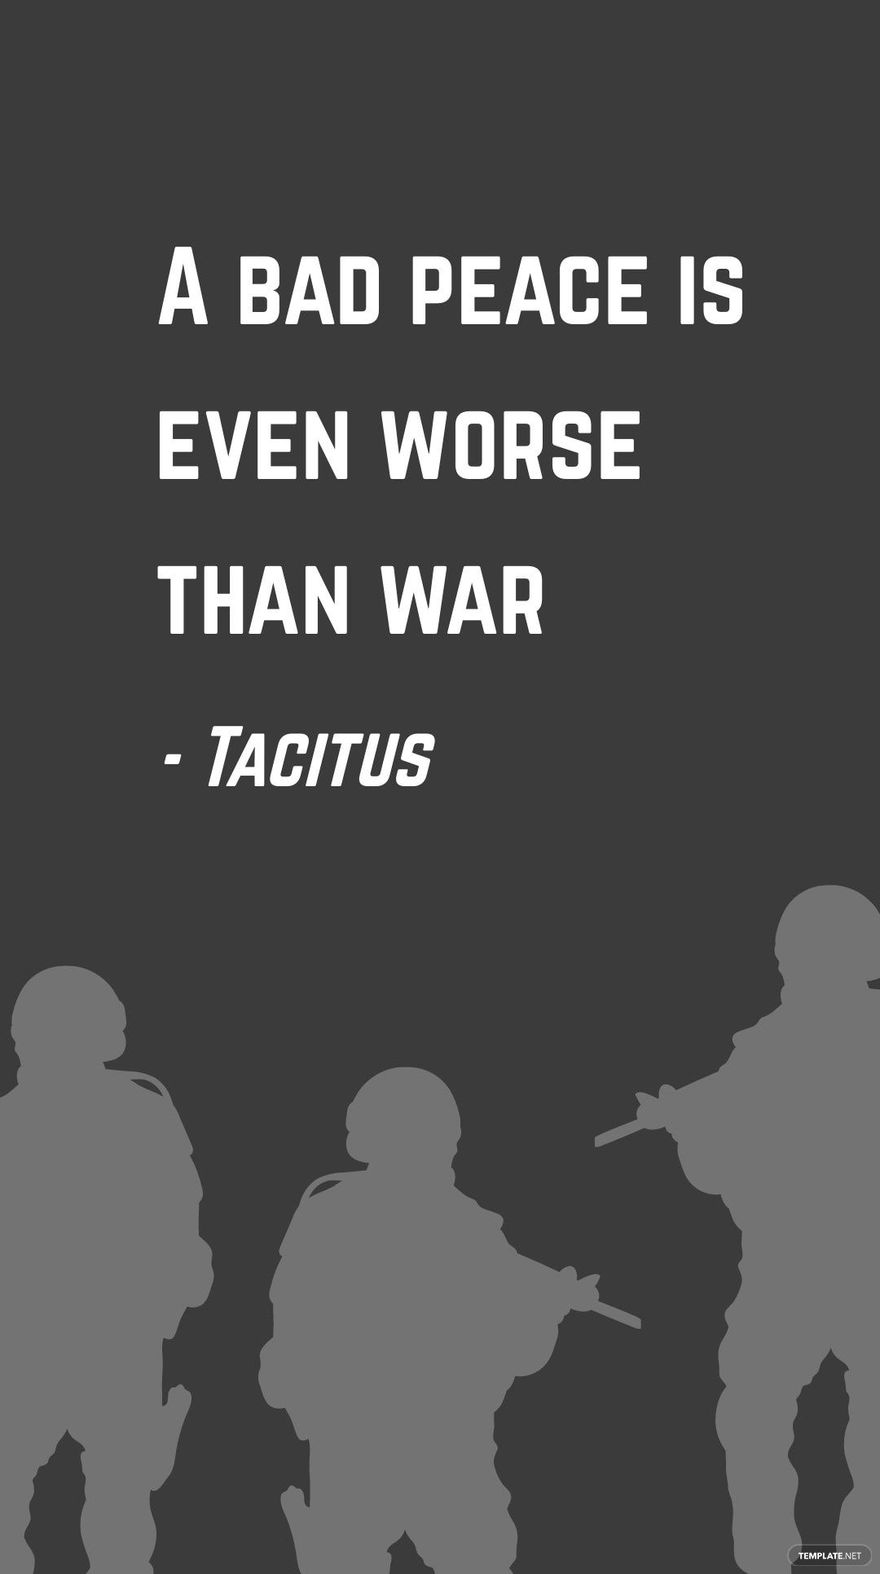 Tacitus - A bad peace is even worse than war